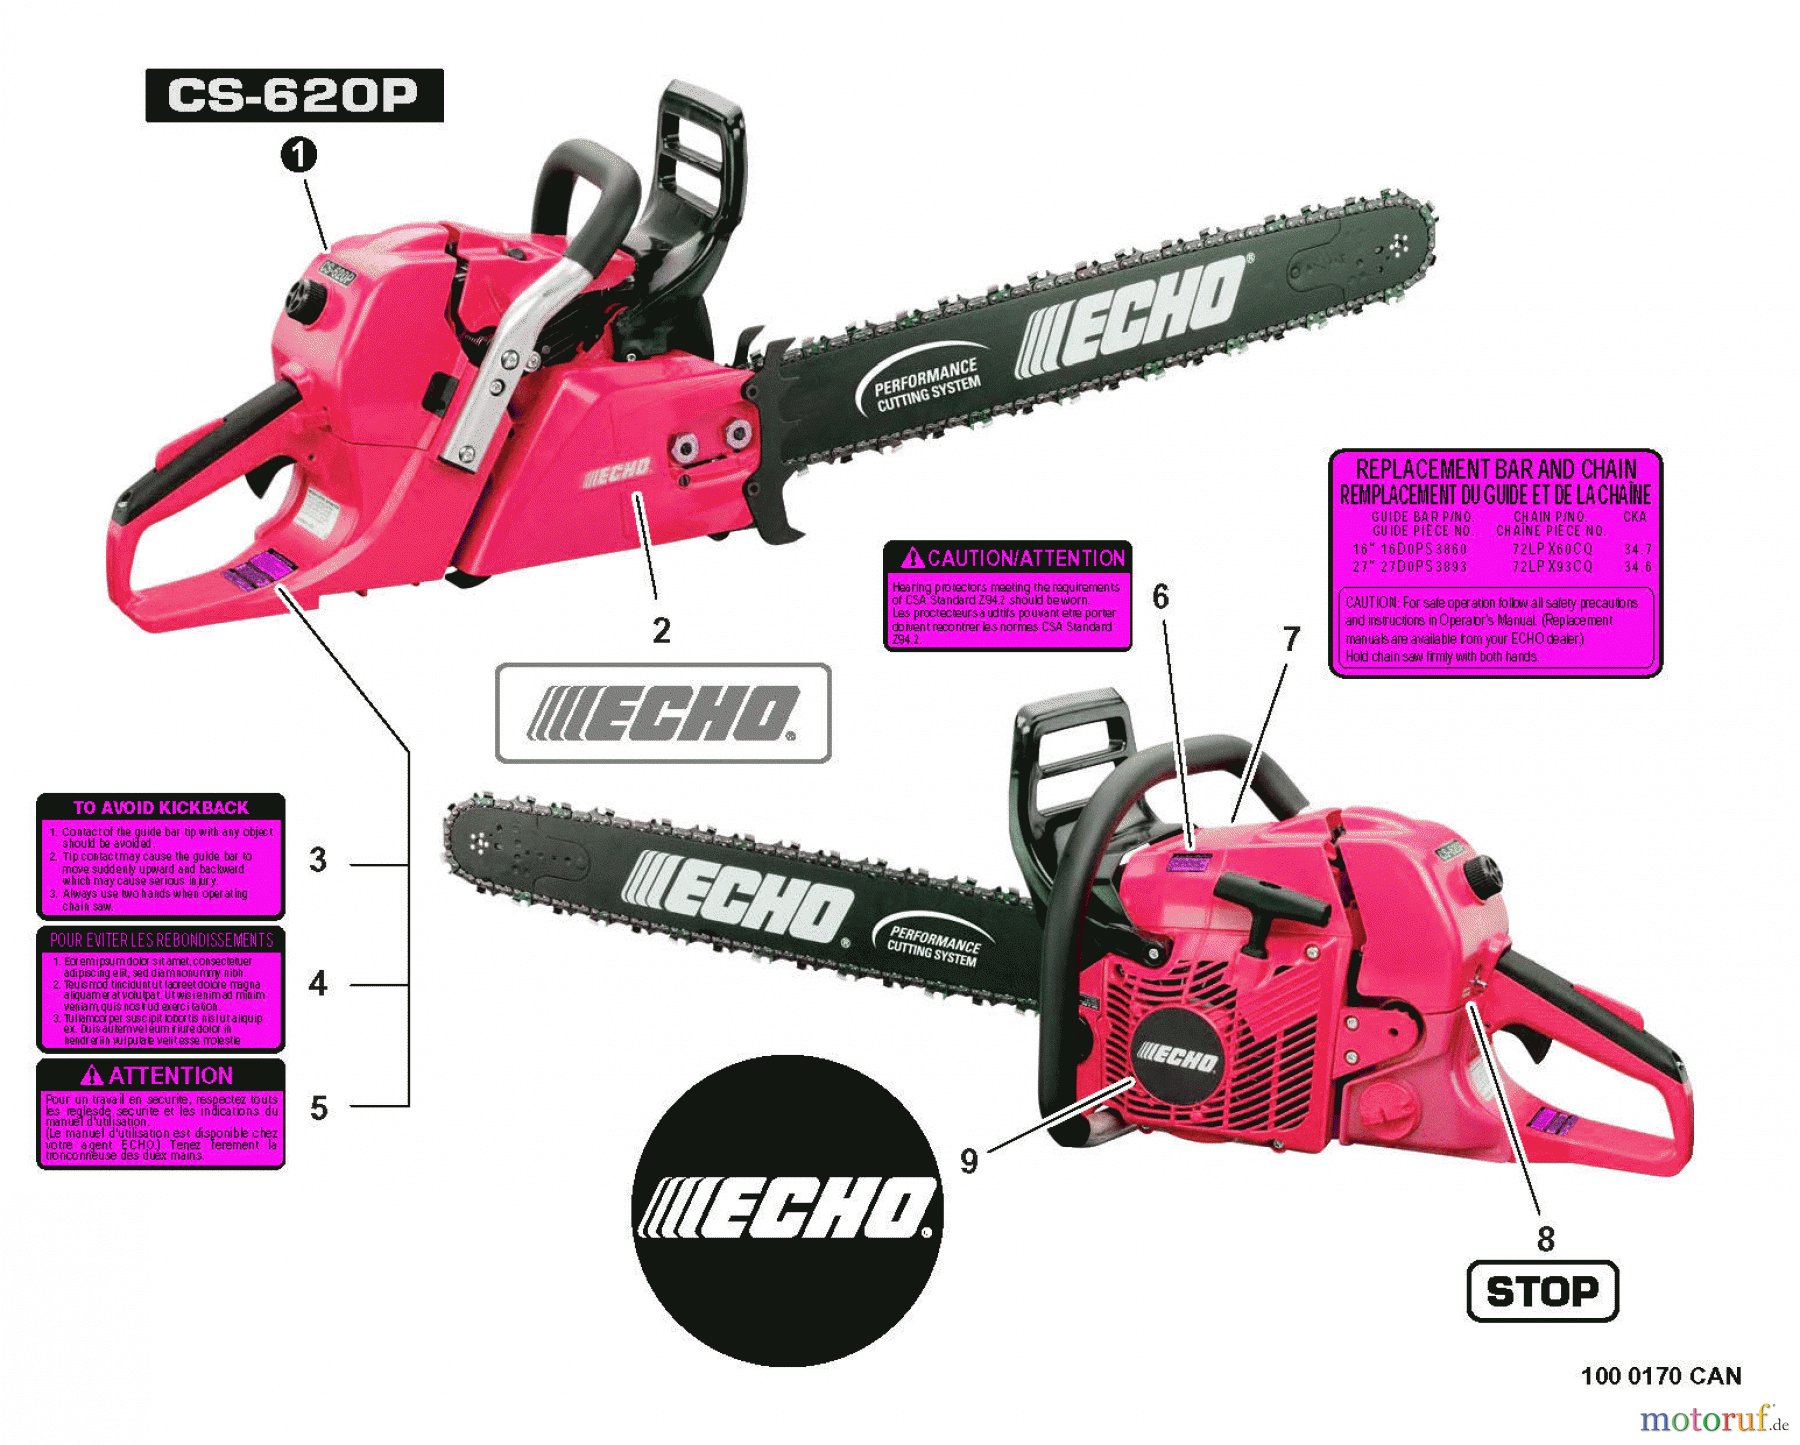  Echo Sägen, Kettensägen CS-620P - Echo Chainsaw, Labels